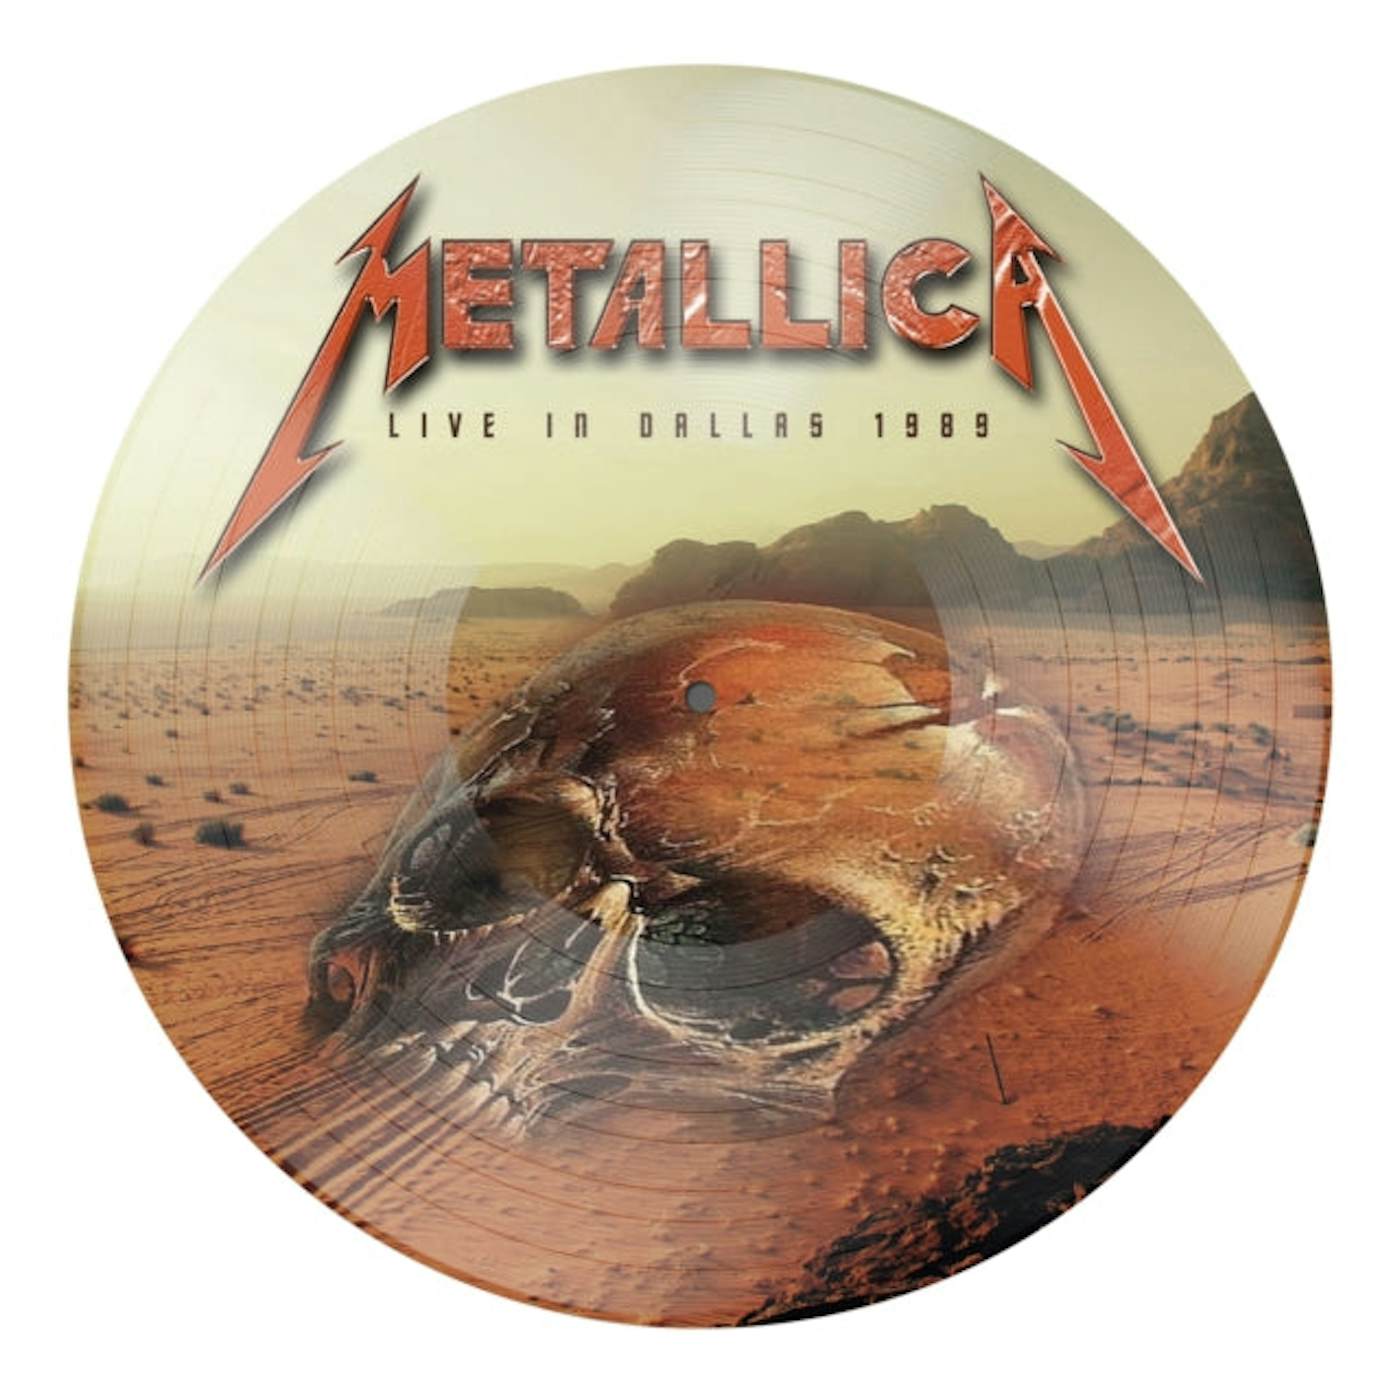 Metallica LP Vinyl Record - Reunion Arena: Dallas Texas 5th Feb 19 89 (Picture Disc)